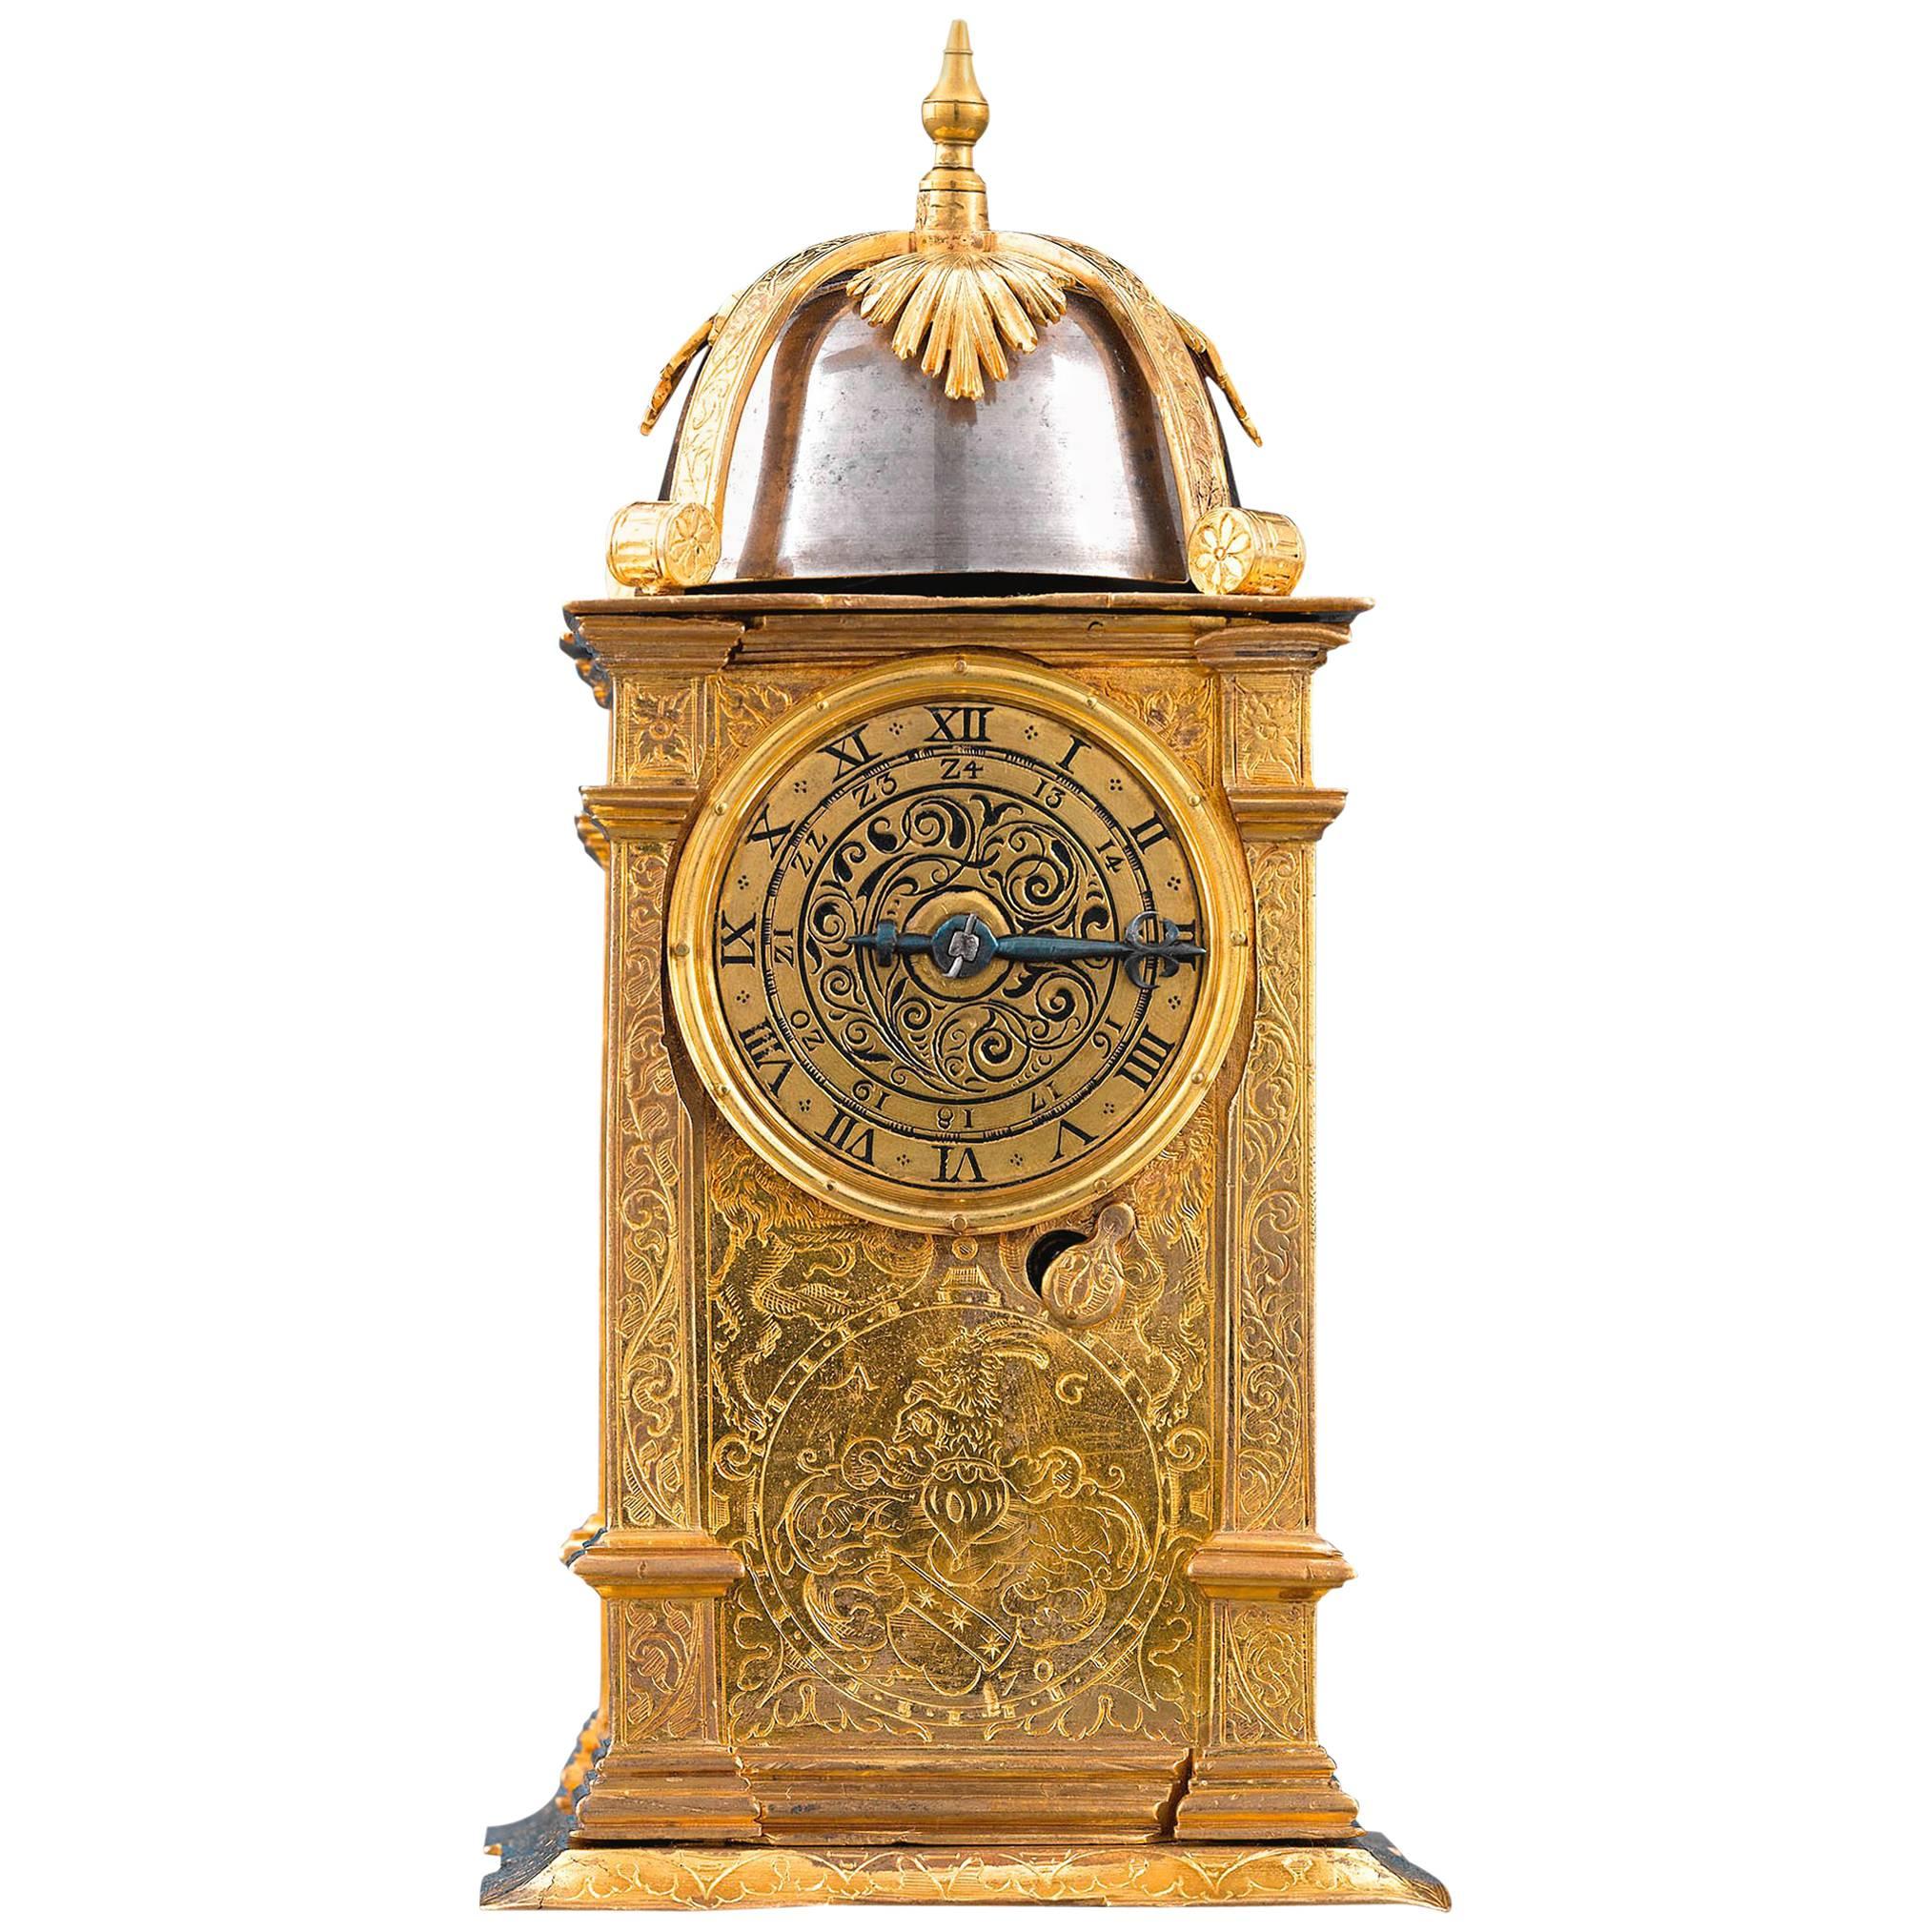 16th Century Renaissance Turret Clock